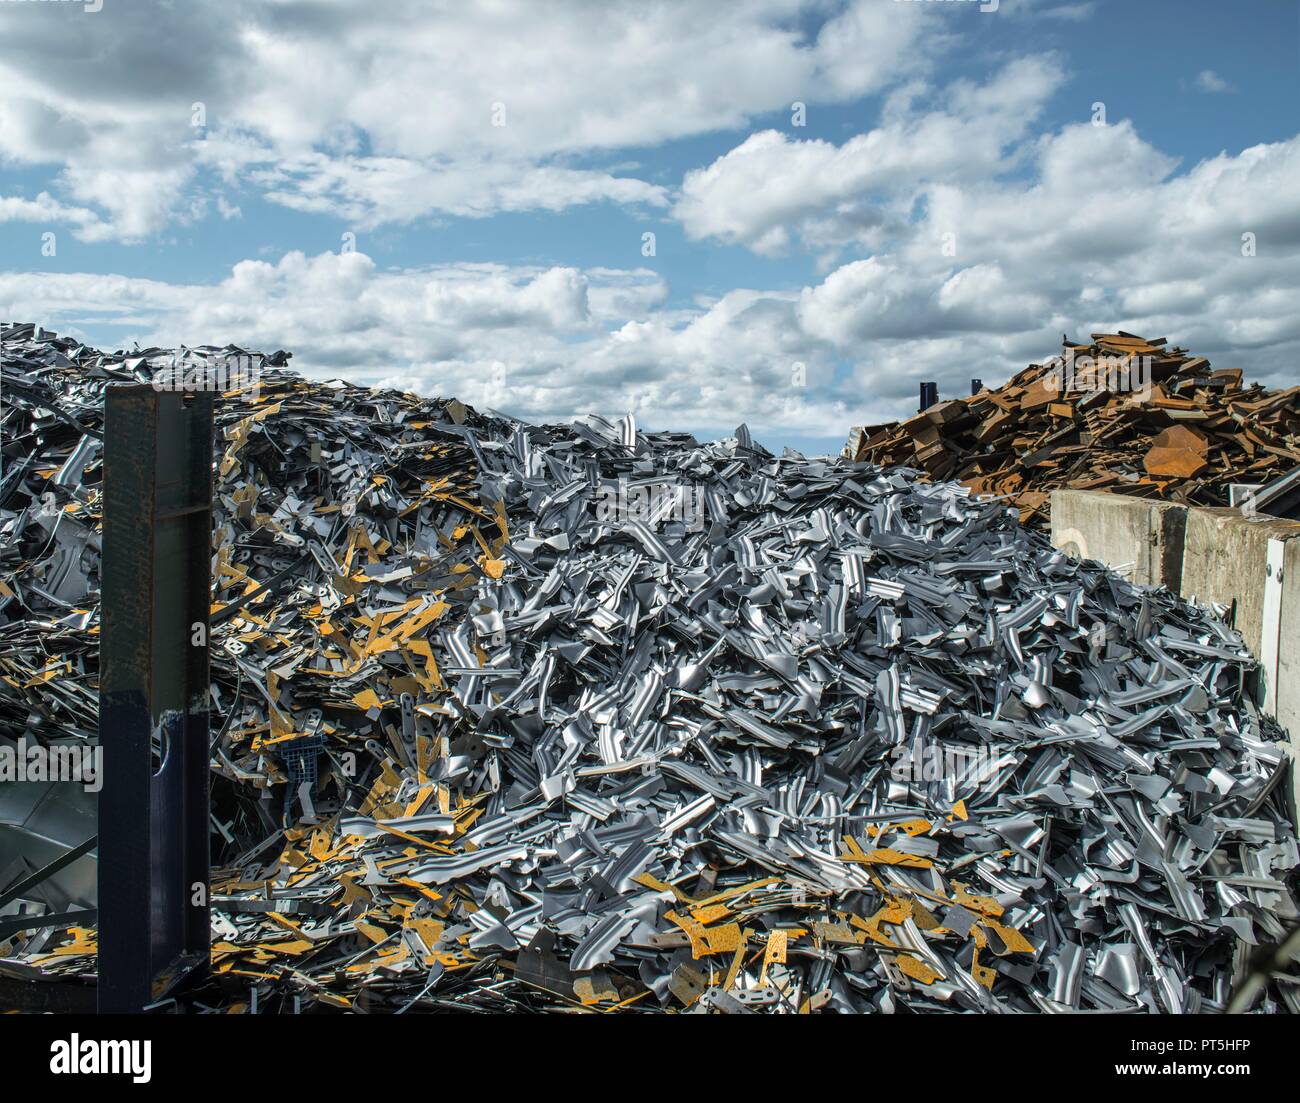 Heaps of steel (ferrous) and non-ferrous scrap metal in a scrapworks. Stock Photo